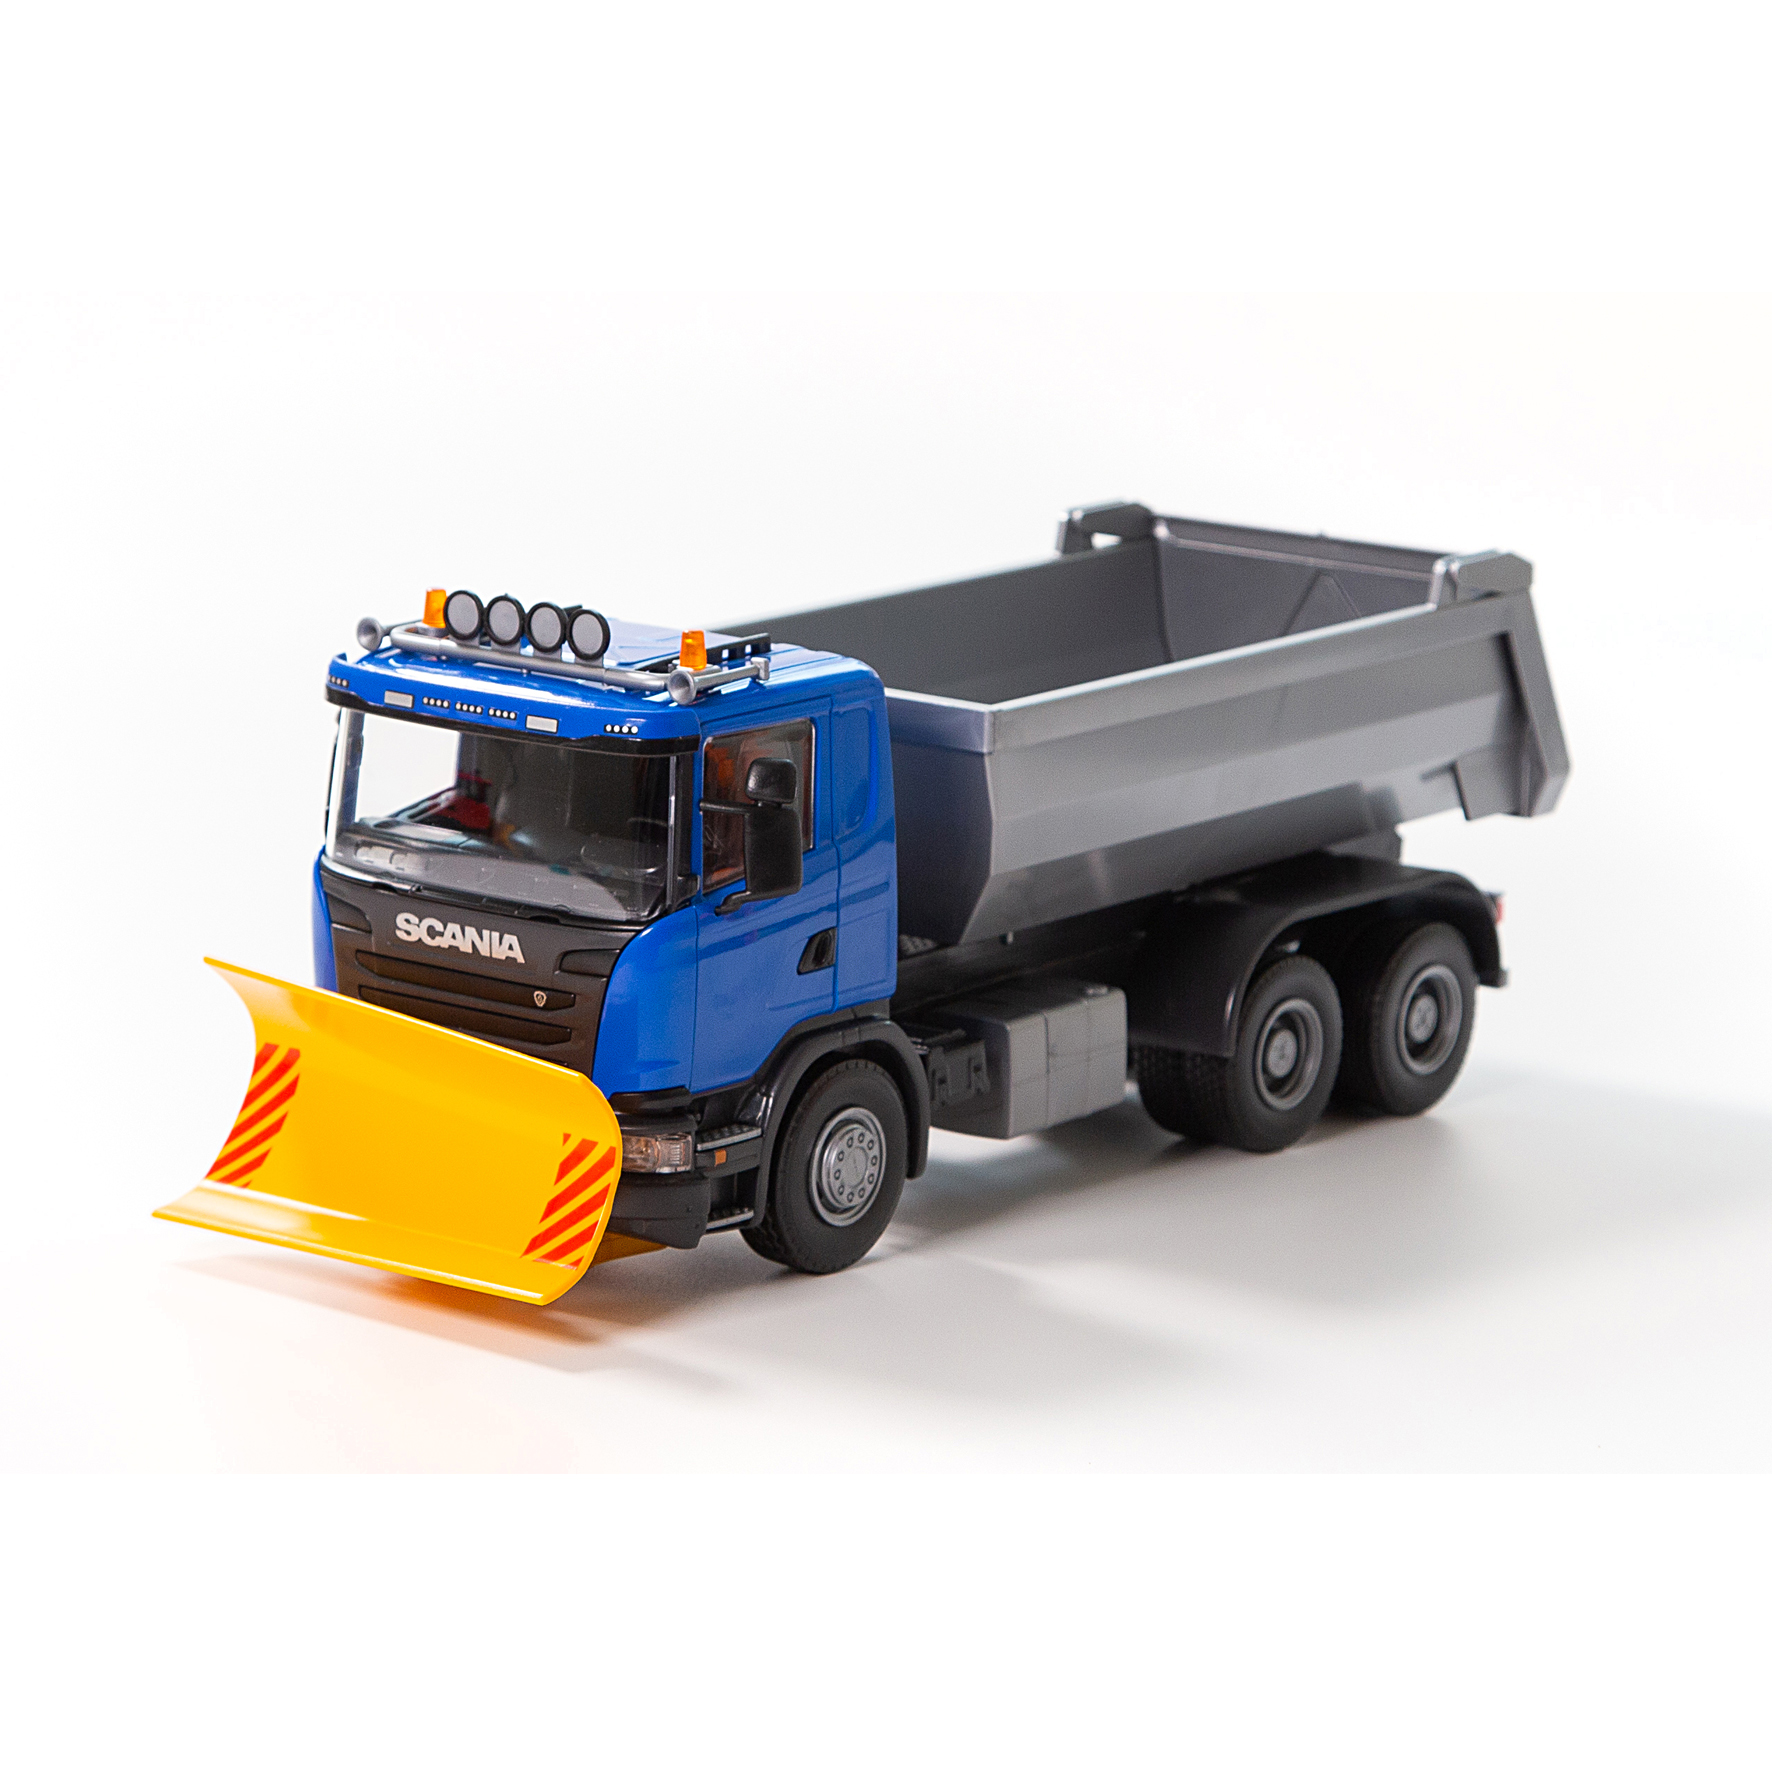 Toy trucks emek toy car tipper with plow scania blue 1:25